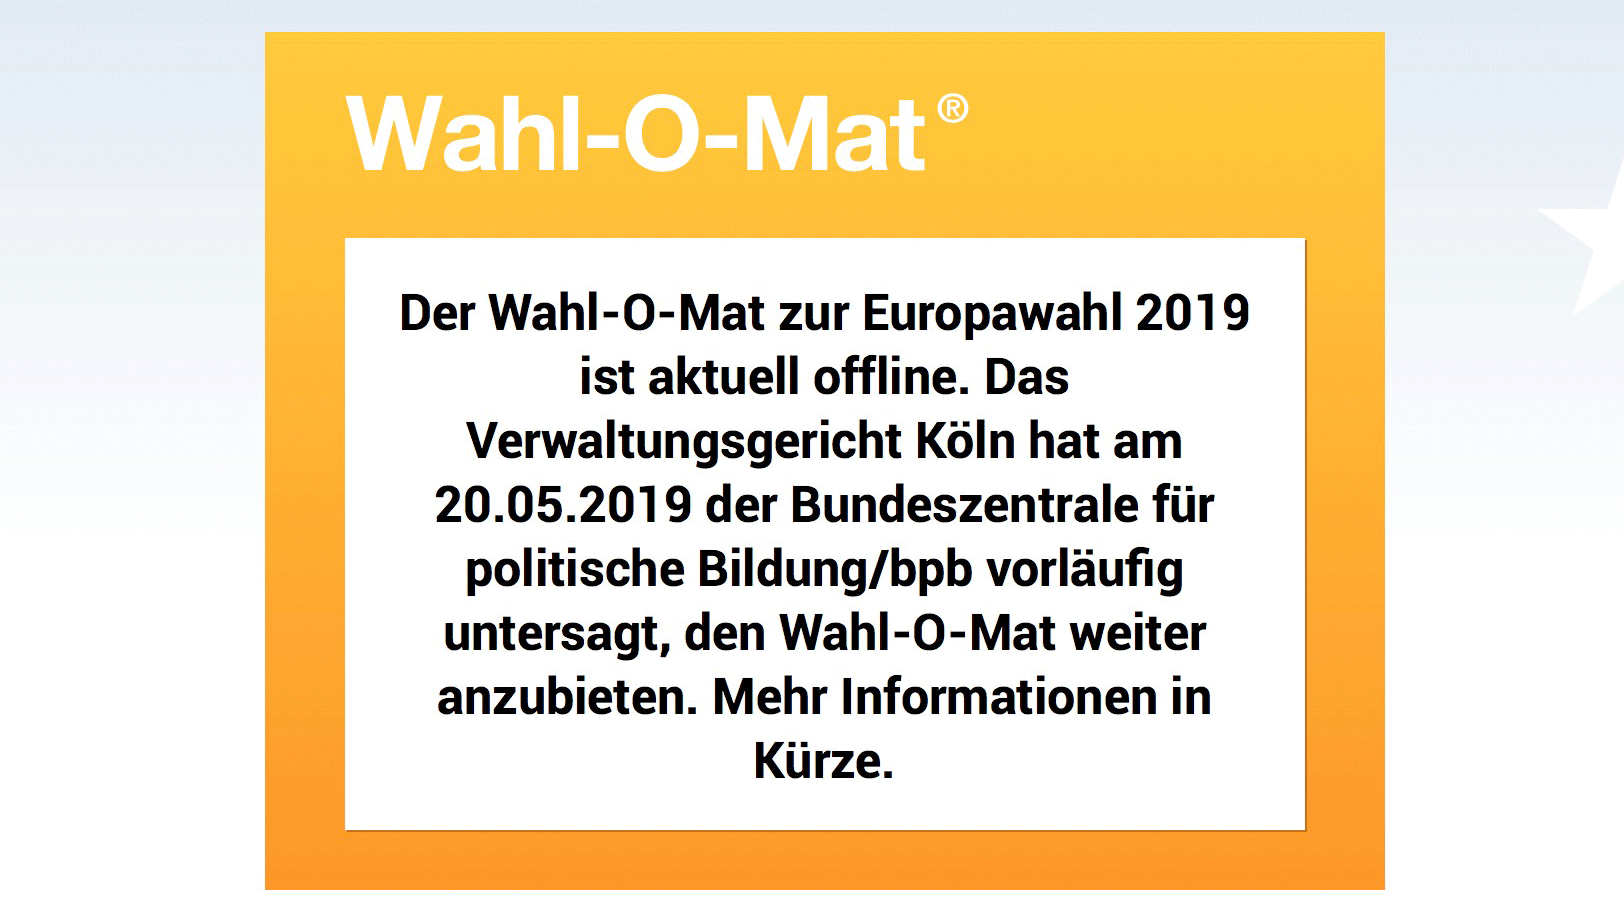 Wahl-O-Mat: Bundeszentrale will gerichtliches Verbot anfechten